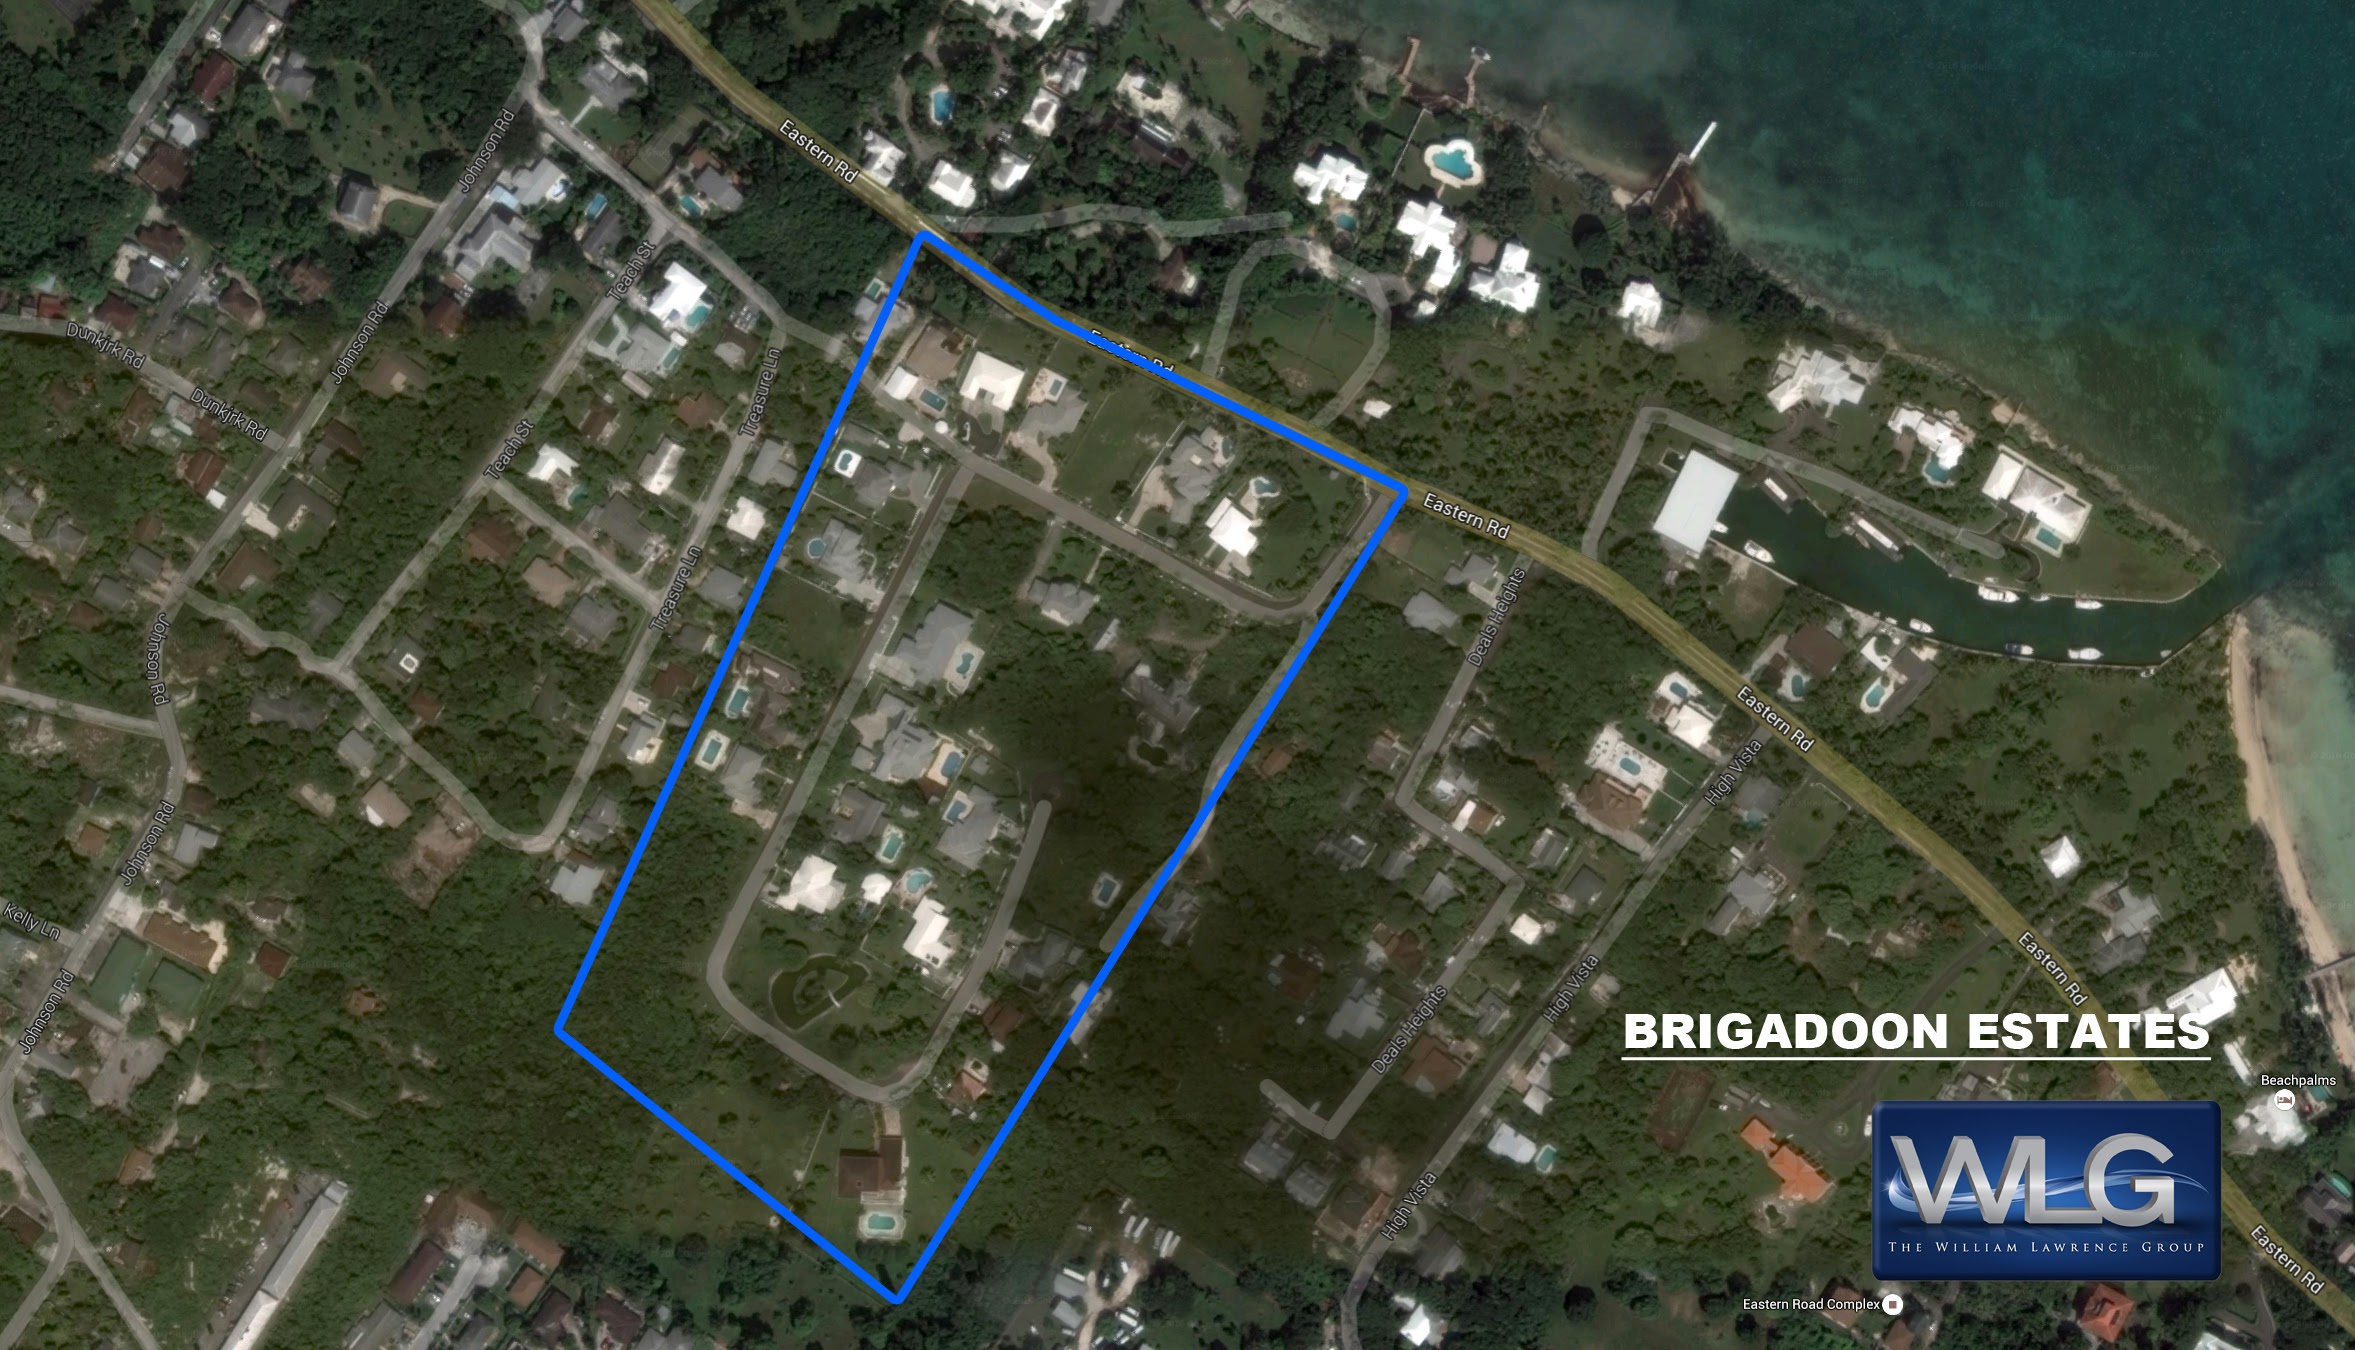 Brigadoon Estates Nassau Bahamas.jpg